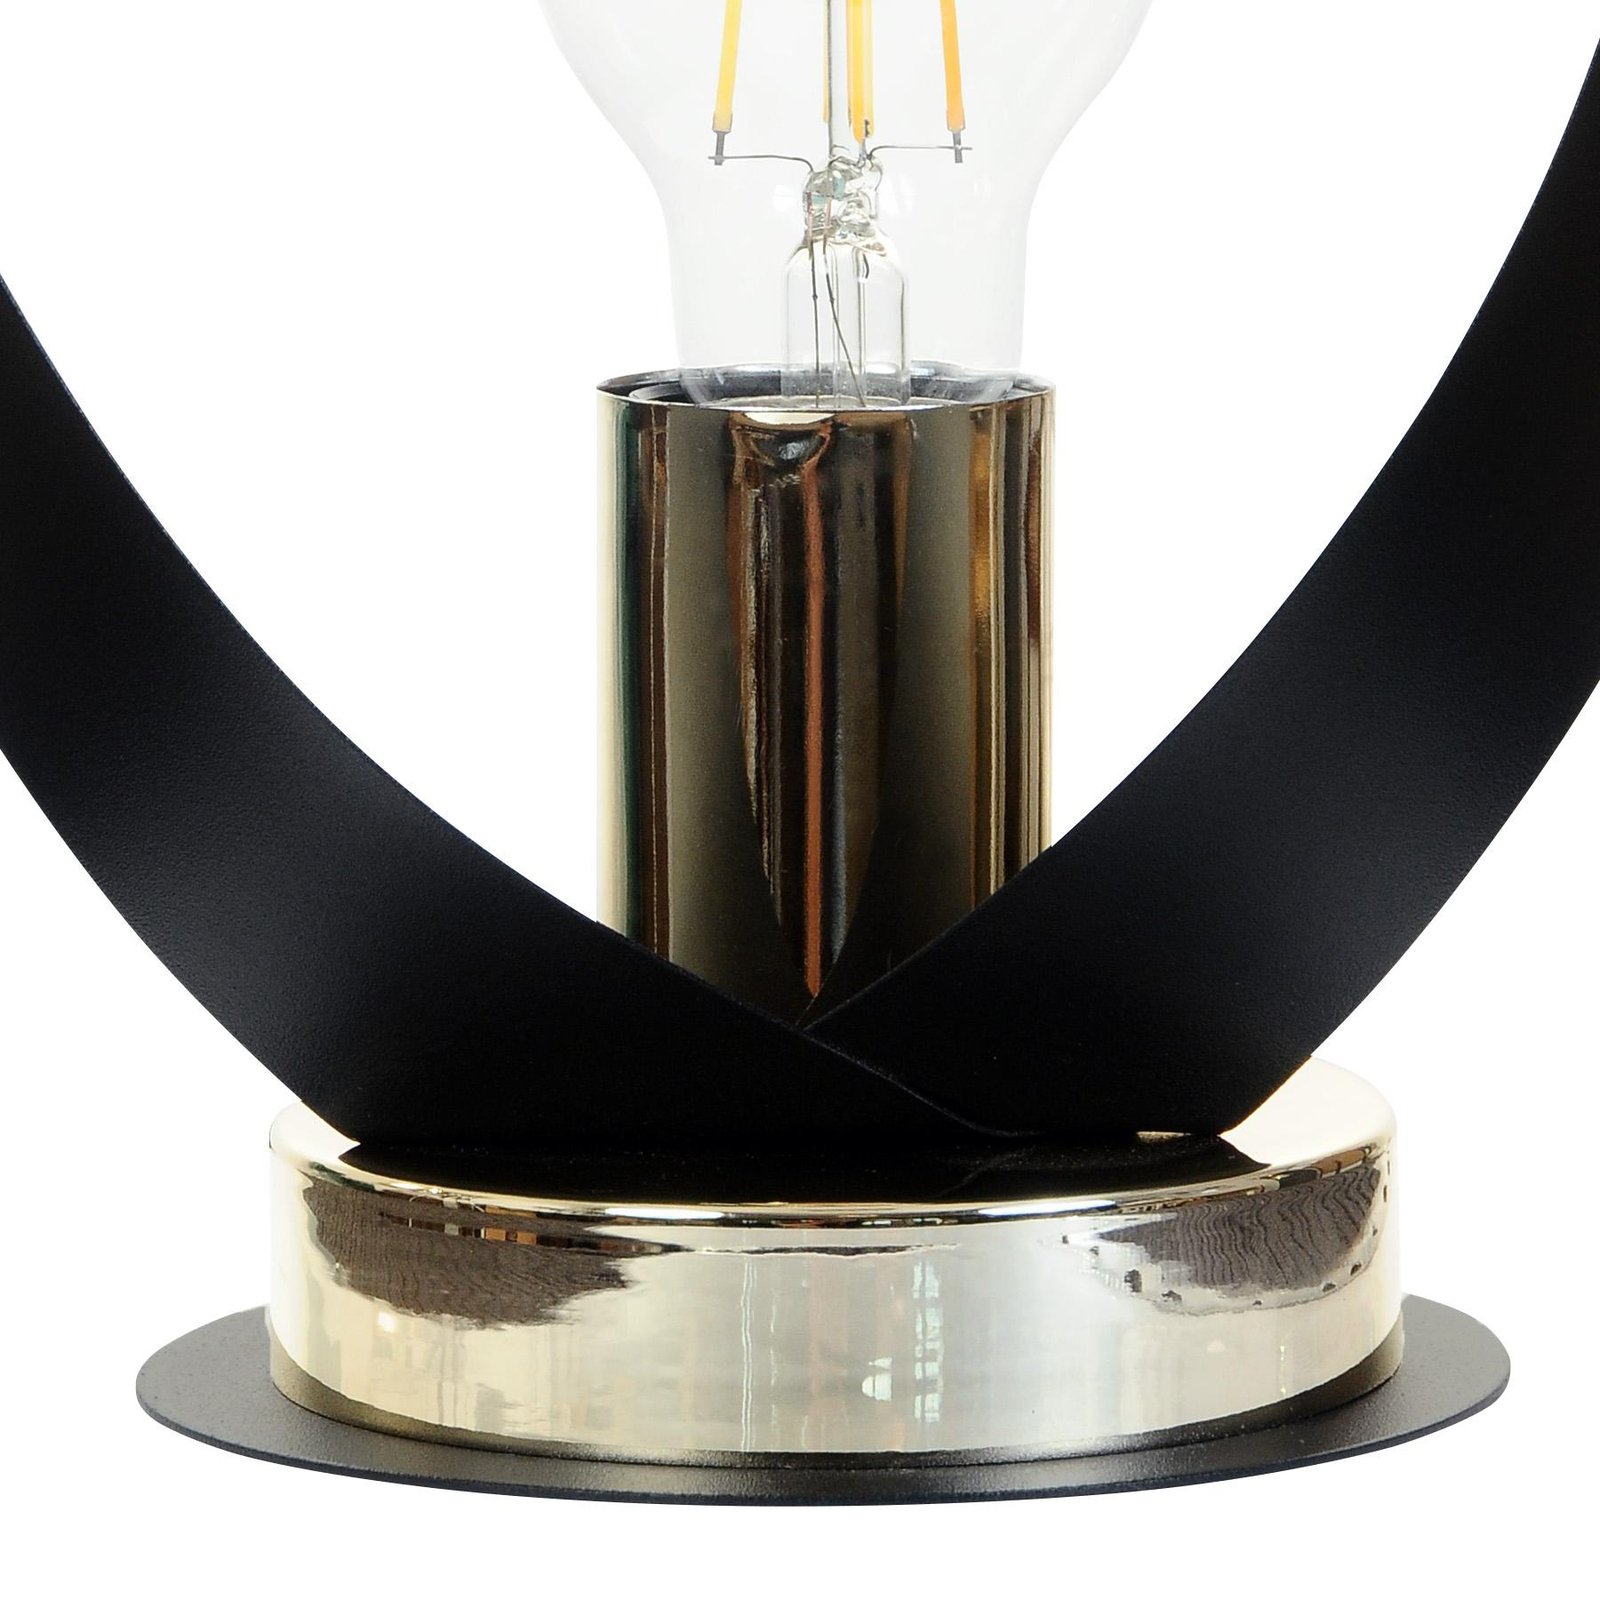 Stolná lampa Euluna Petla, čierna/zlatá, kov, Ø 19 cm